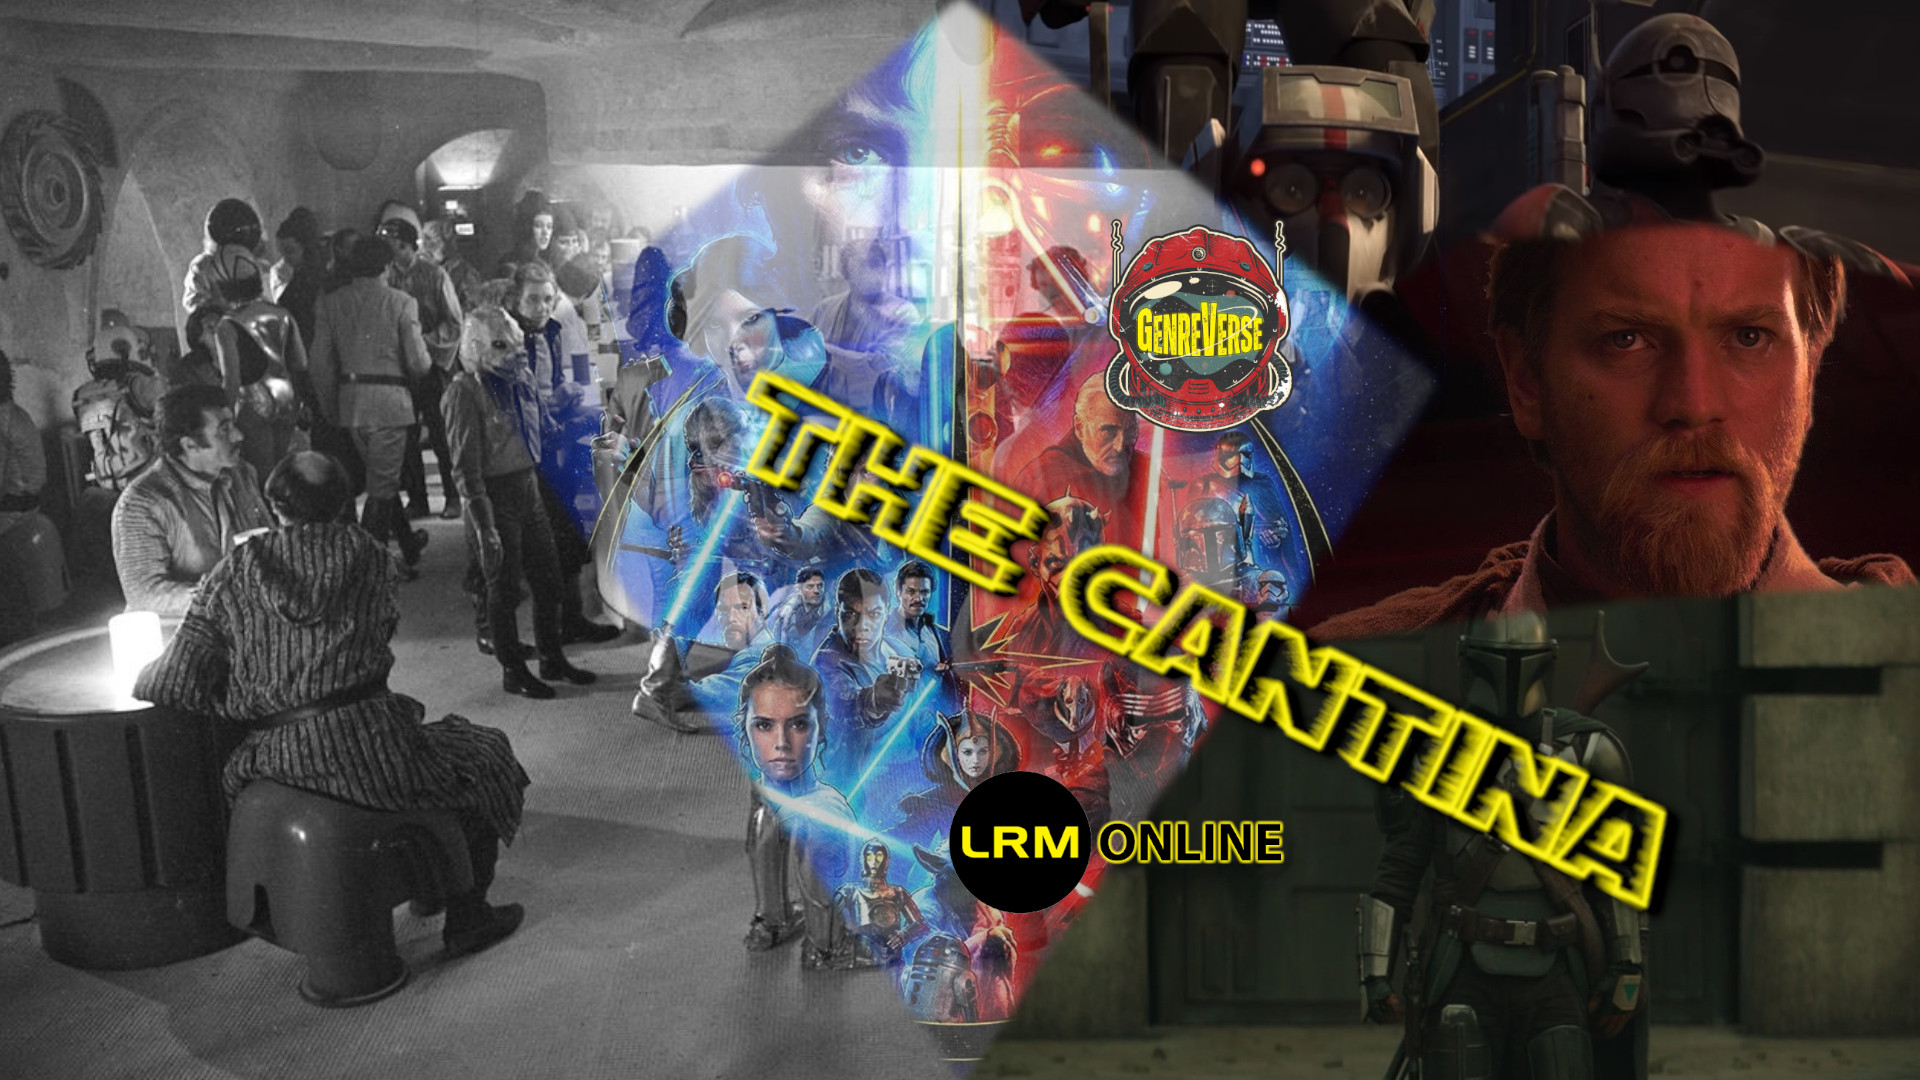 Obi-Wan Kenobi Story News, Mandalorian Season 3 Release Window, & Bad Batch Season 2 Likely | The Cantina Podcast